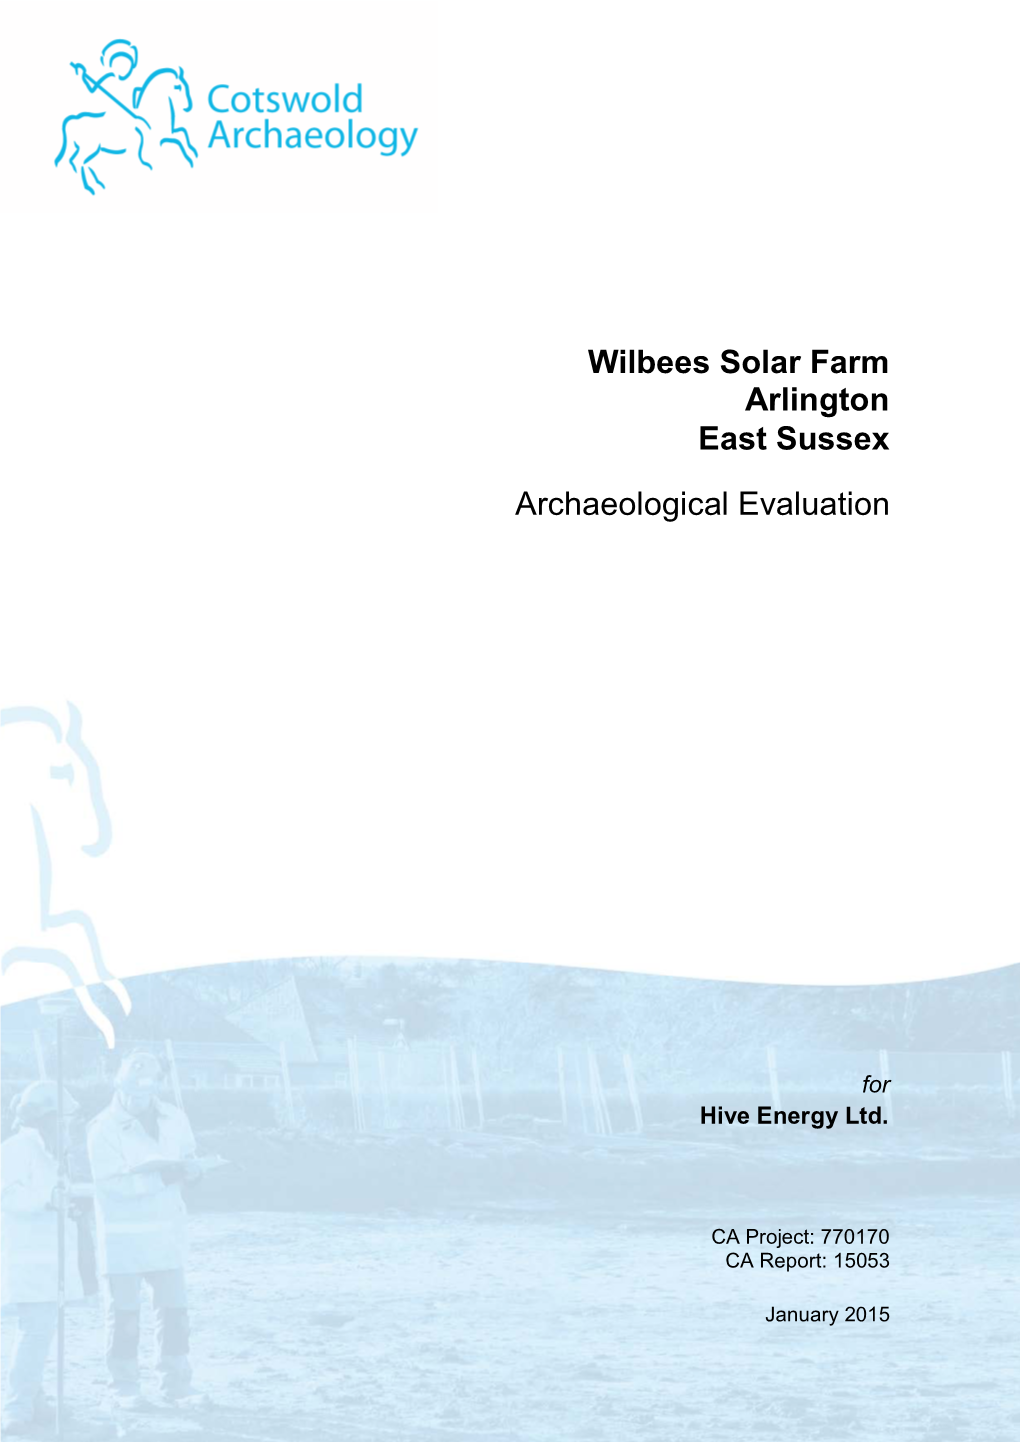 Wilbees Solar Farm Arlington East Sussex Archaeological Evaluation